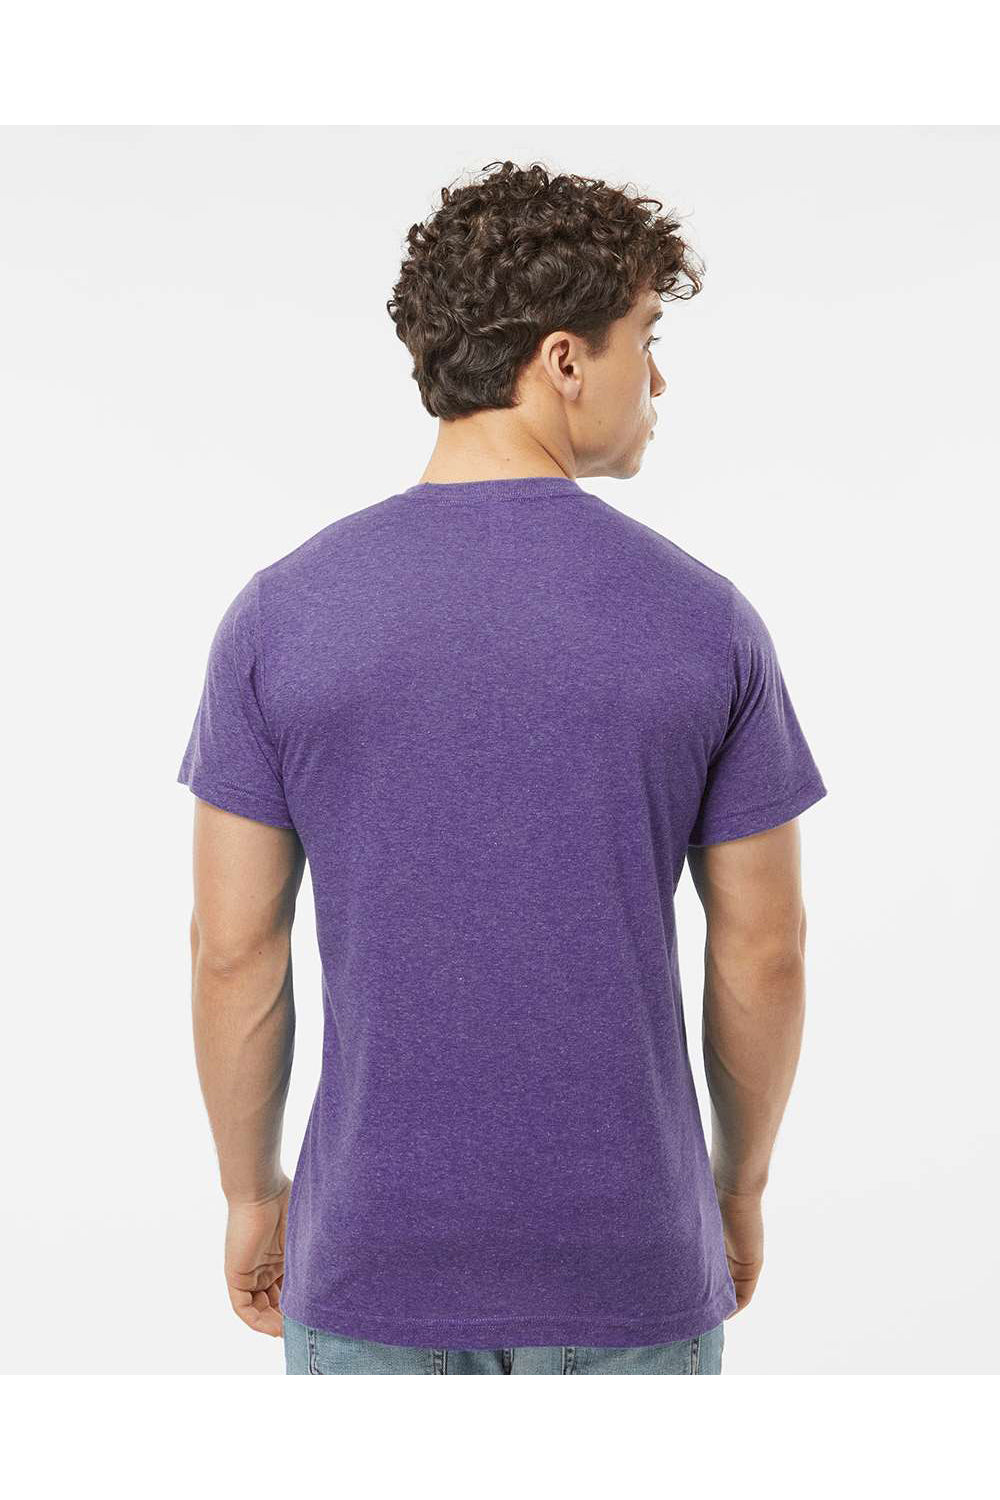 Tultex 241 Mens Poly-Rich Short Sleeve Crewneck T-Shirt Heather Purple Model Back